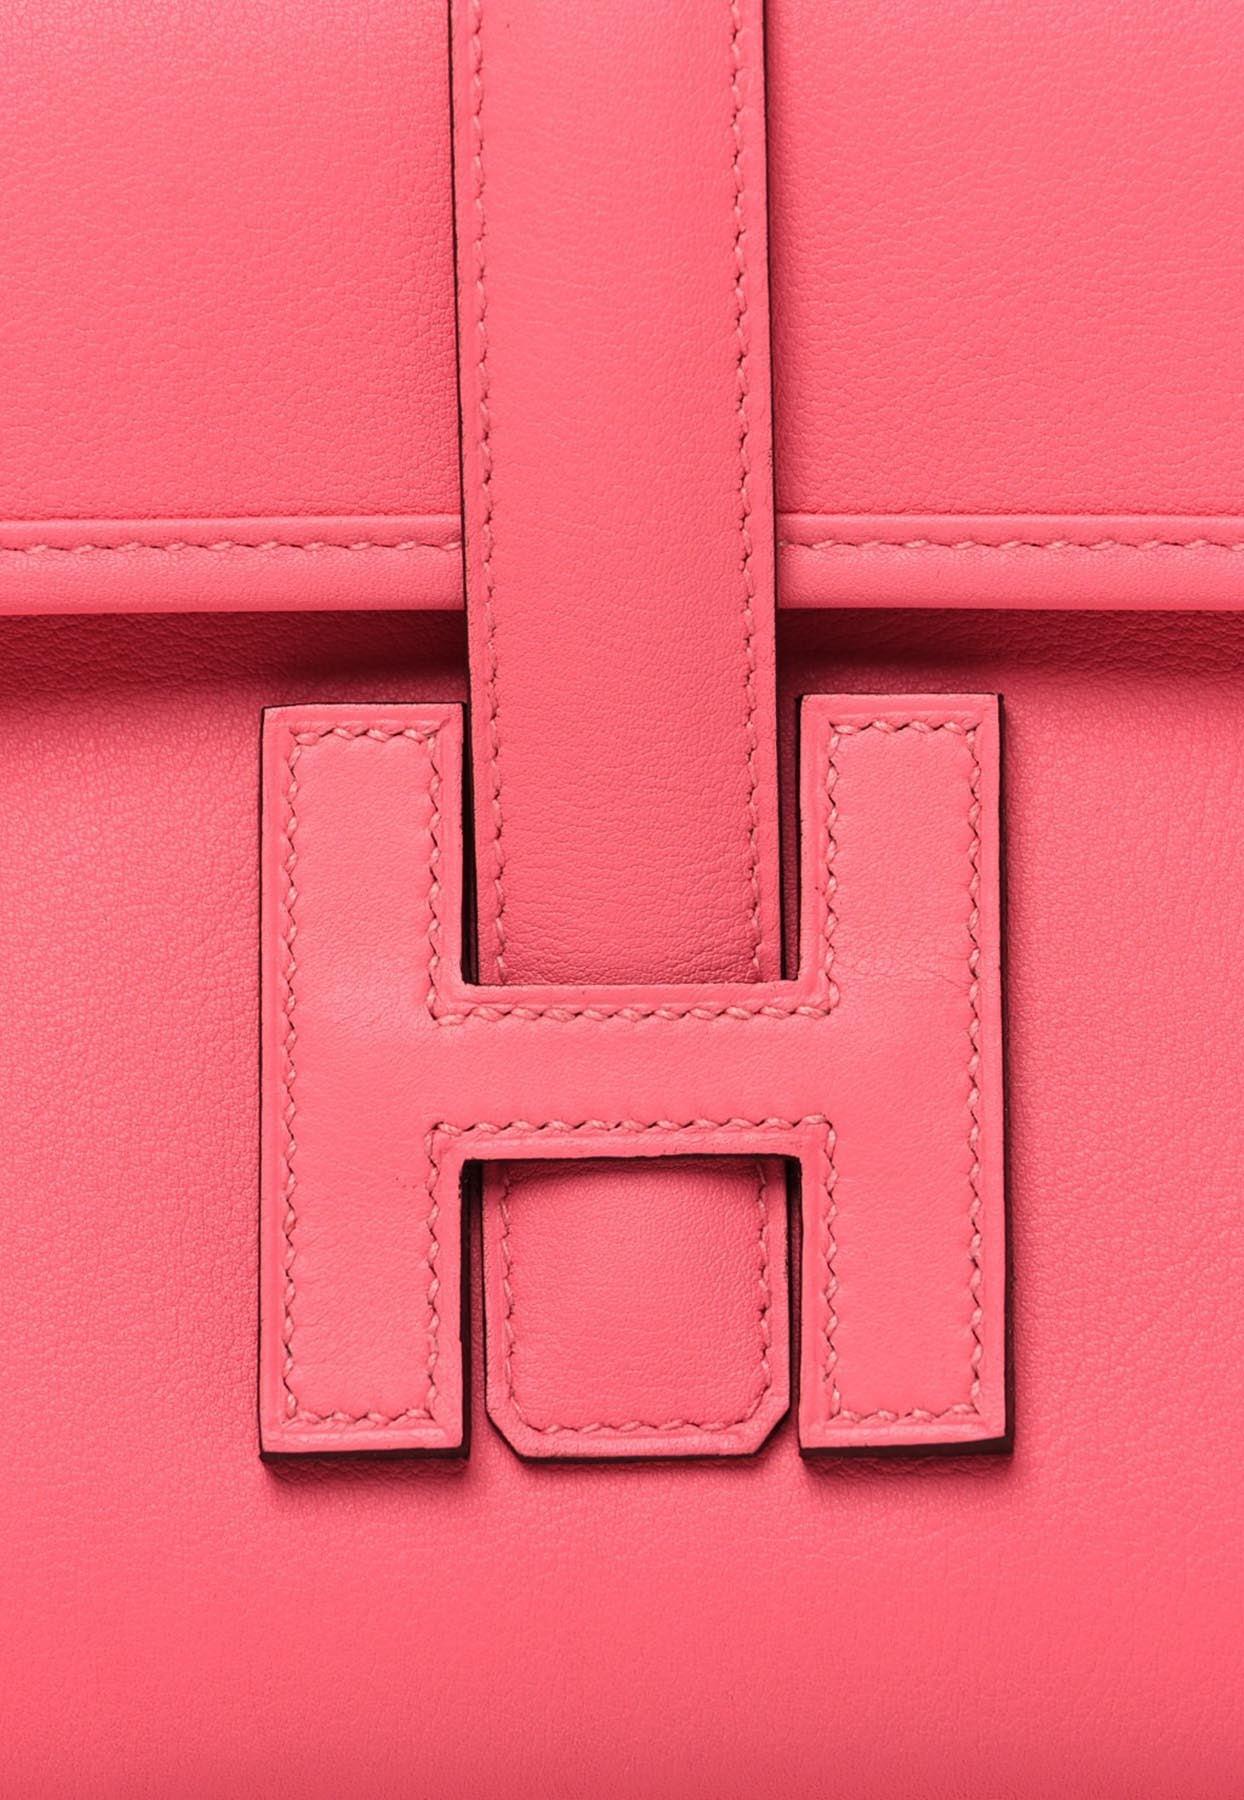 Brand new Hermes Jige Elan Clutch 29 - Rose Pourpre Pink Swift